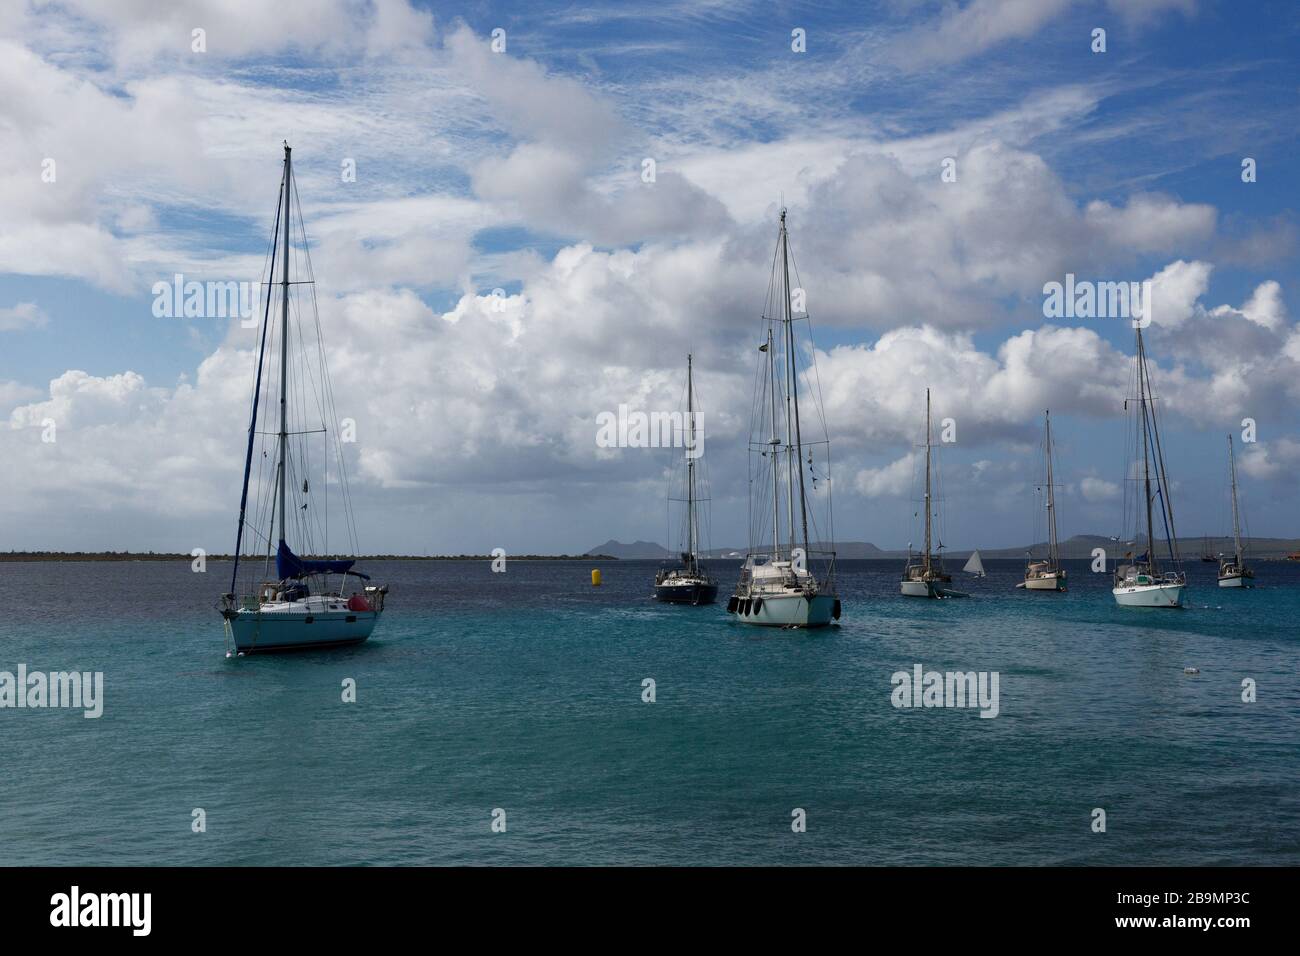 Sailboats in the harbor of Kralendijk, Bonaire, Caribbean Stock Photo